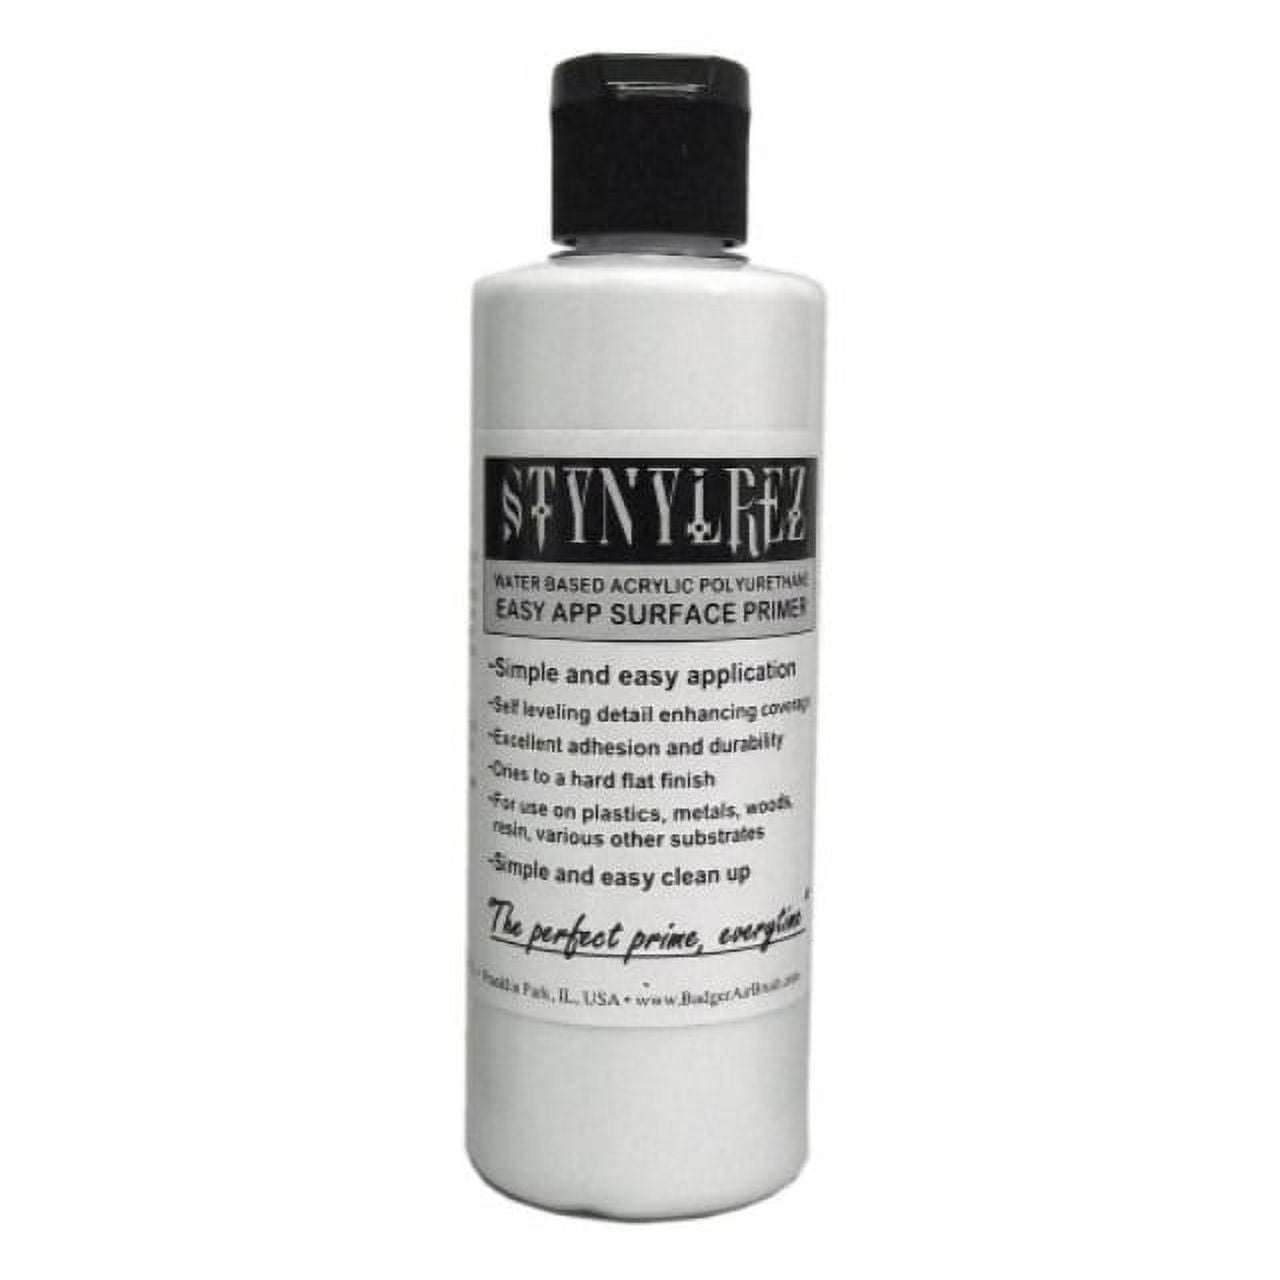 Badger Air-Brush SNR-210 Stynylrez Water Based Acrylic Polyurethane 3-Color Primer 2-Ounce White Gray Black